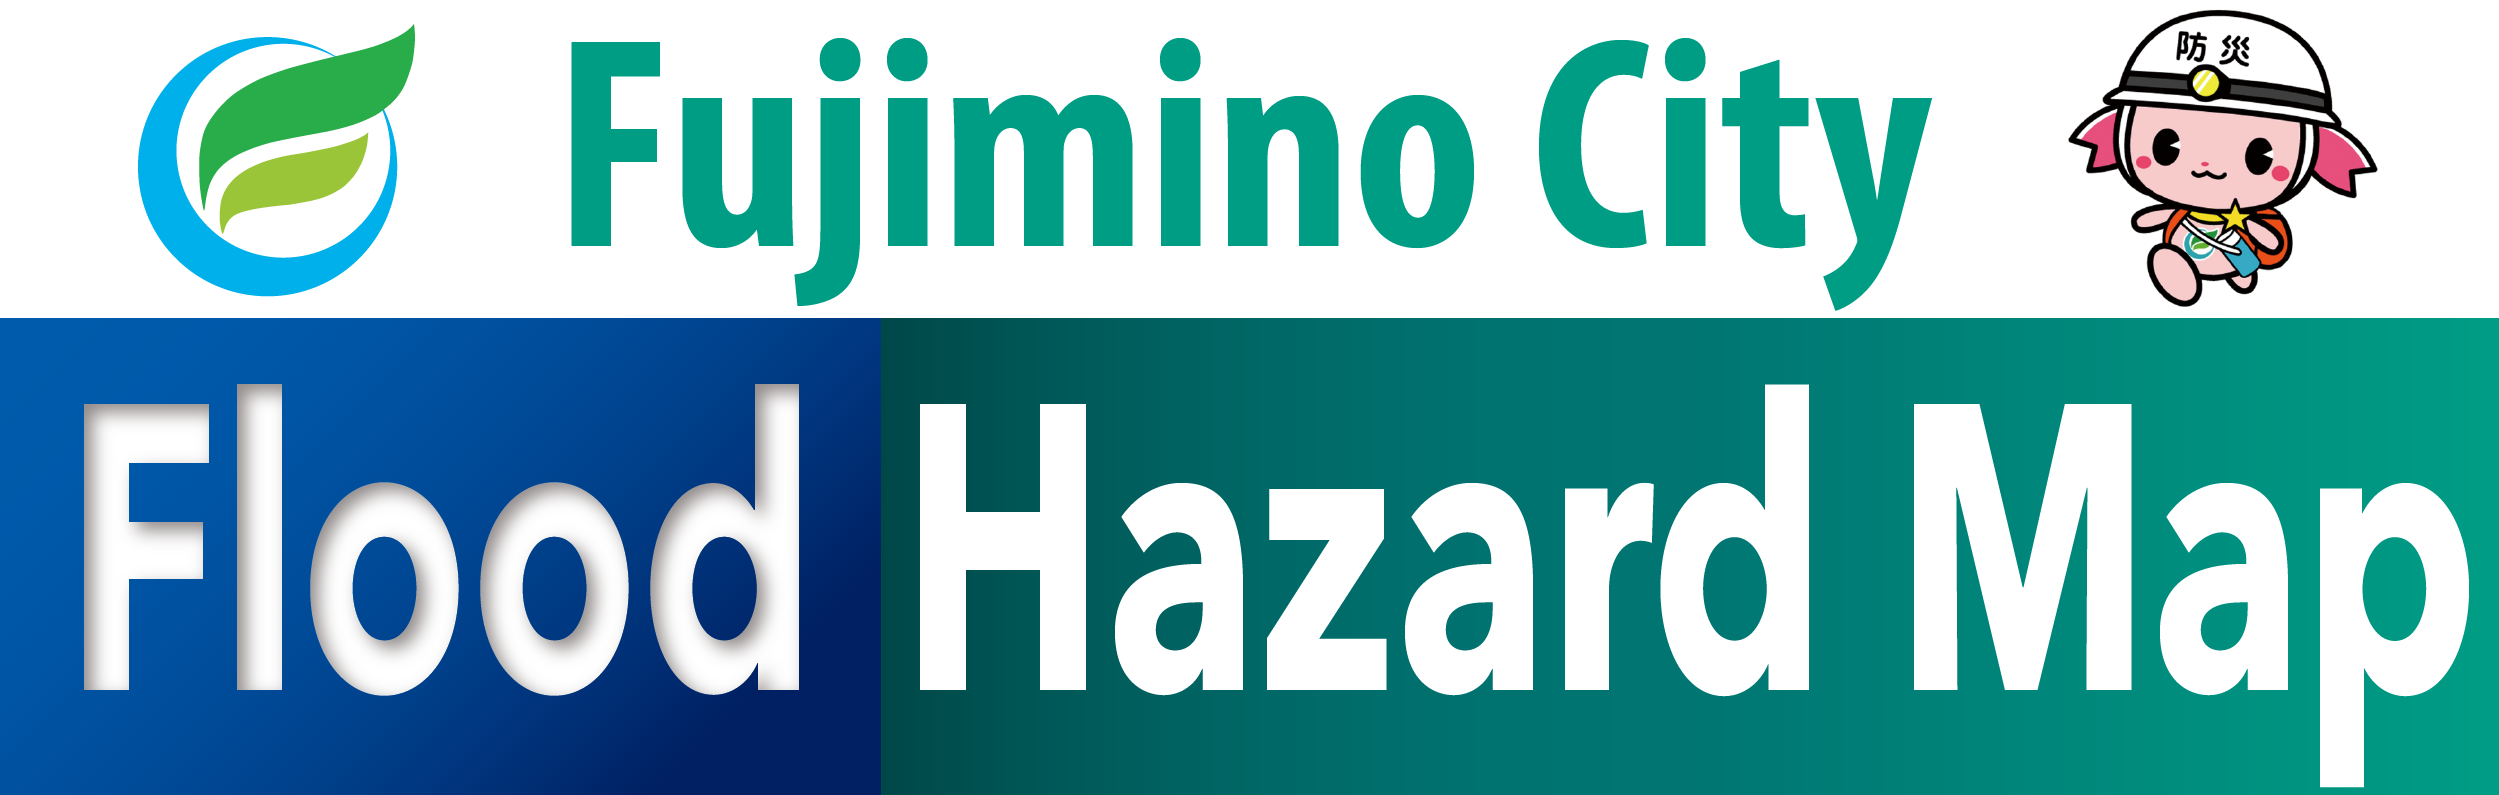 Fujimino City Flood hazard map